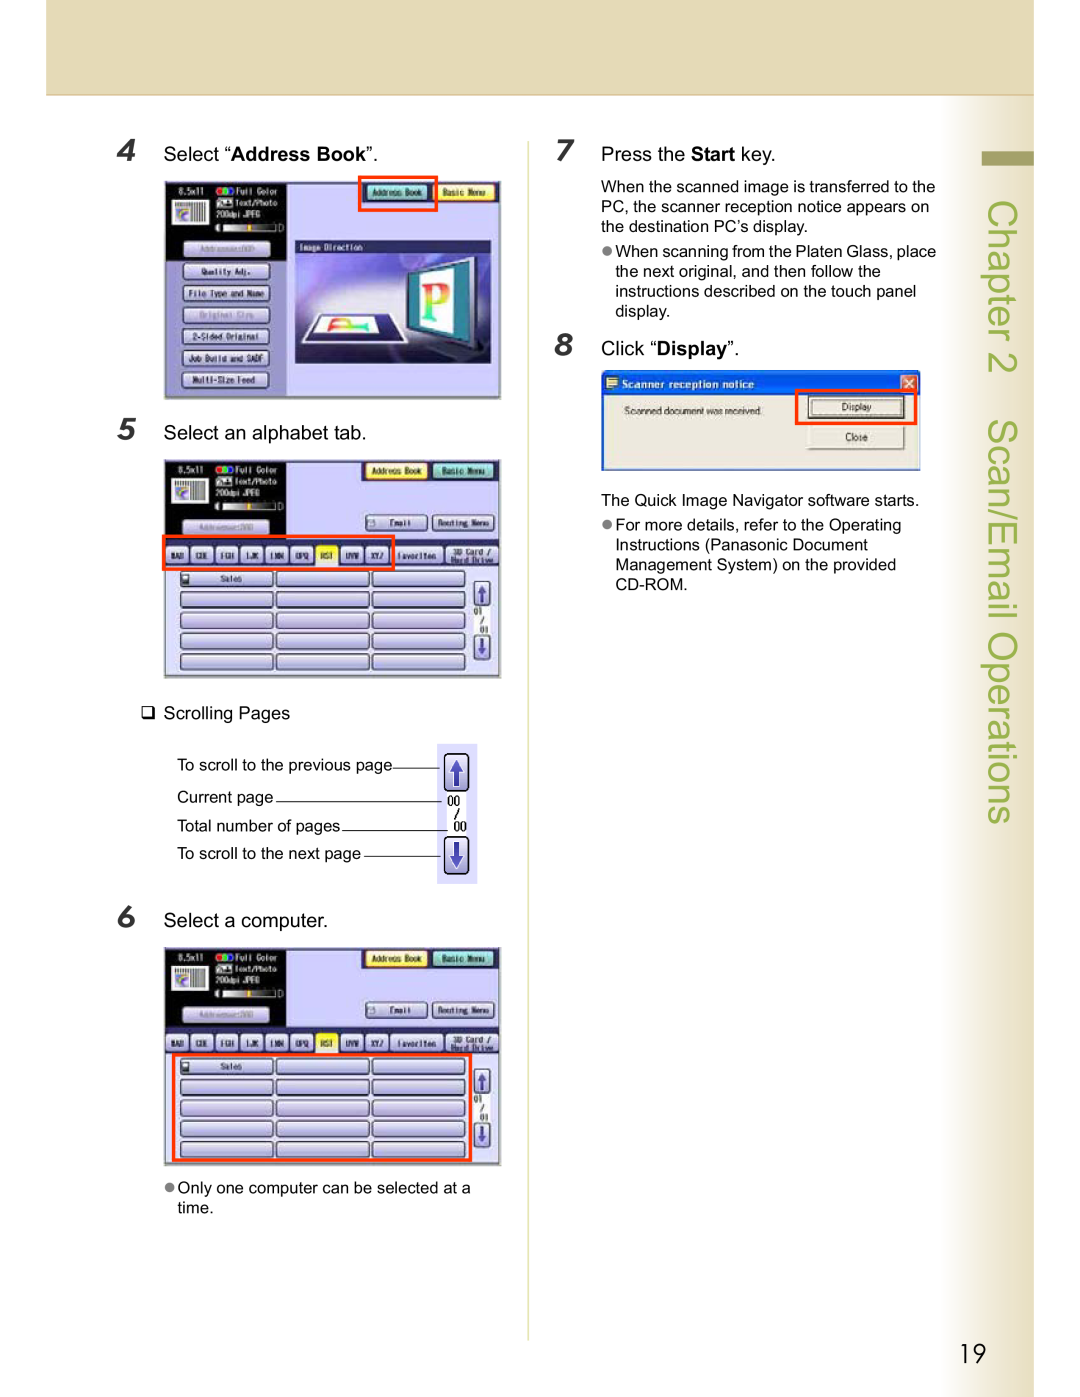 Panasonic DP-C213 Select an alphabet tab, Select a computer, Click “Display”, Scan/Email Operations, Press the Start key 